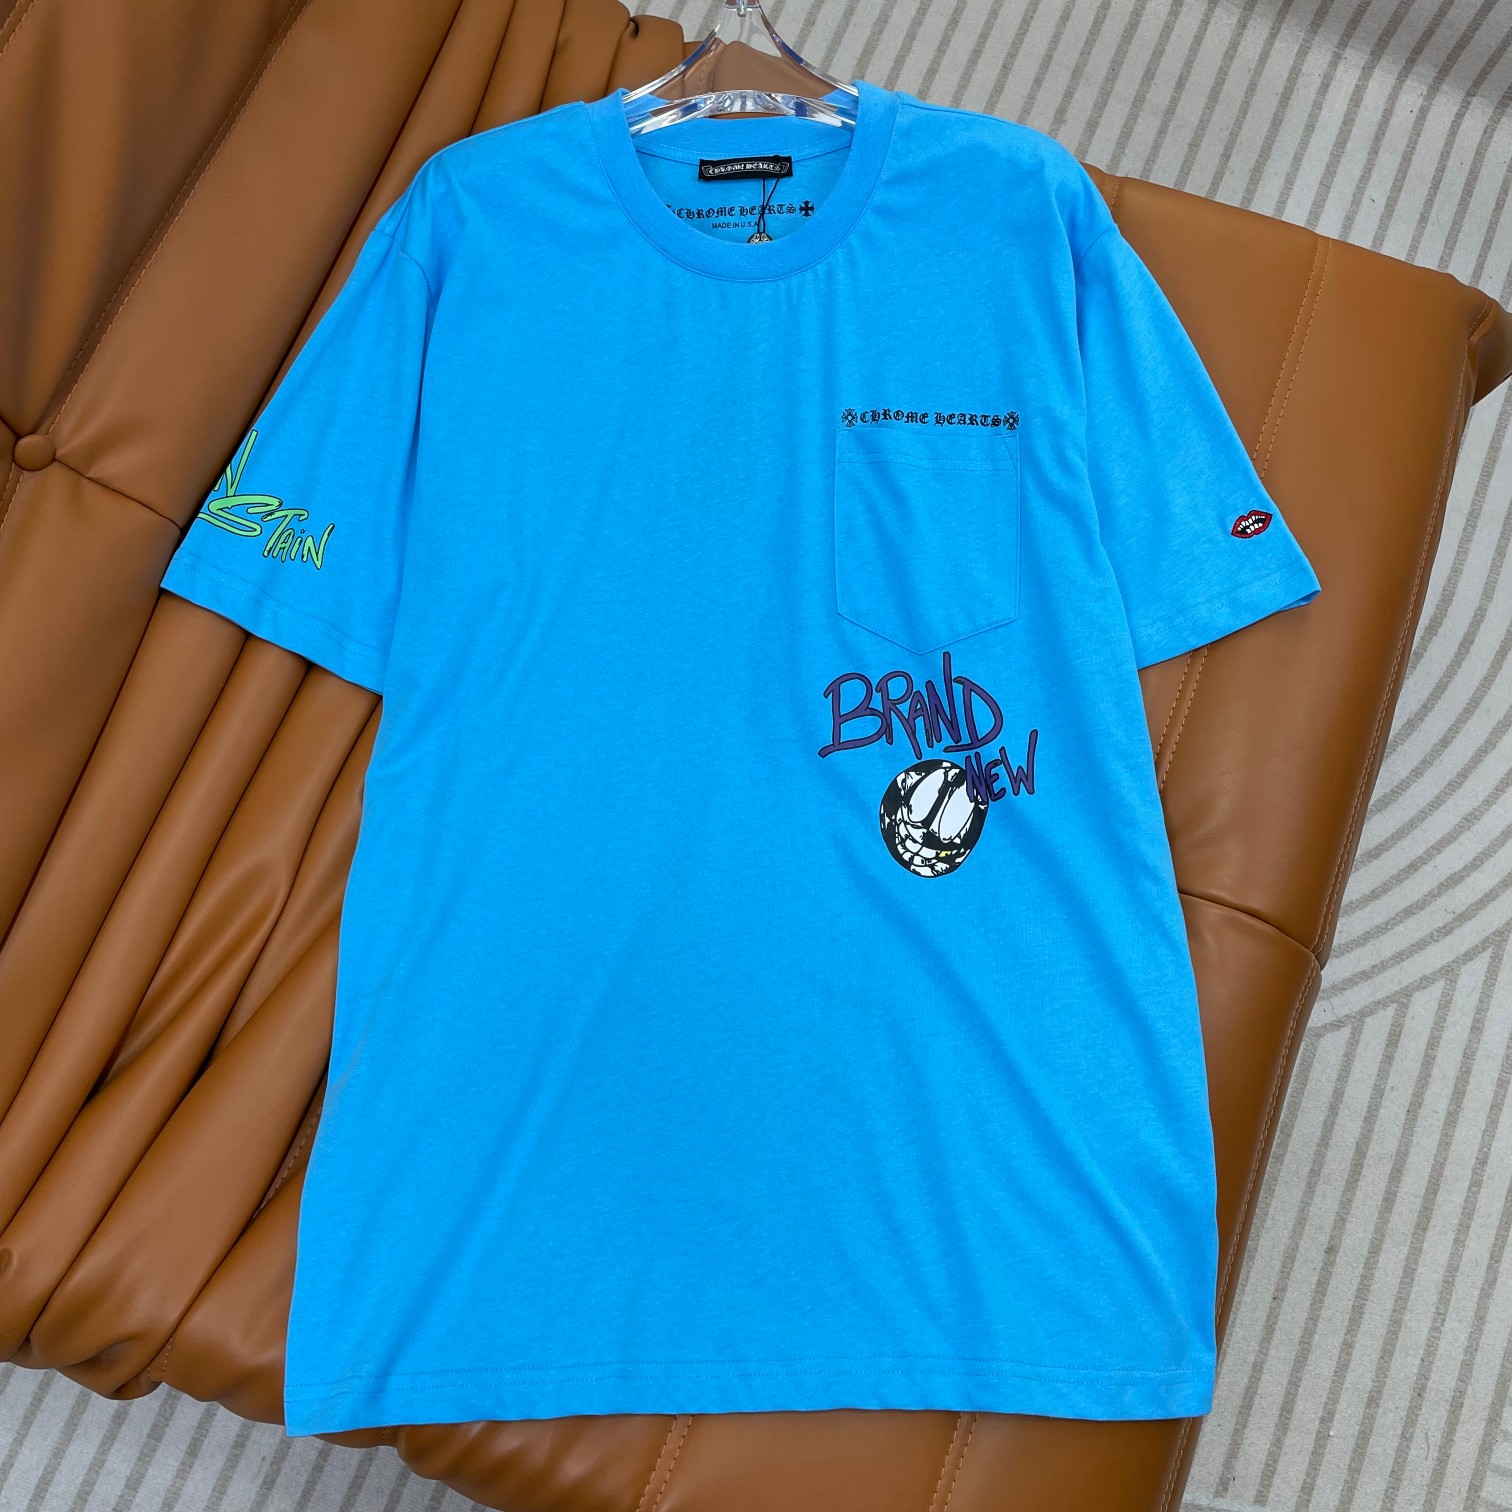 Chrome Hearts Kleding Overhemden T-Shirt Blauw Doodle Afdrukken Unisex Lente/Zomercollectie Korte mouw